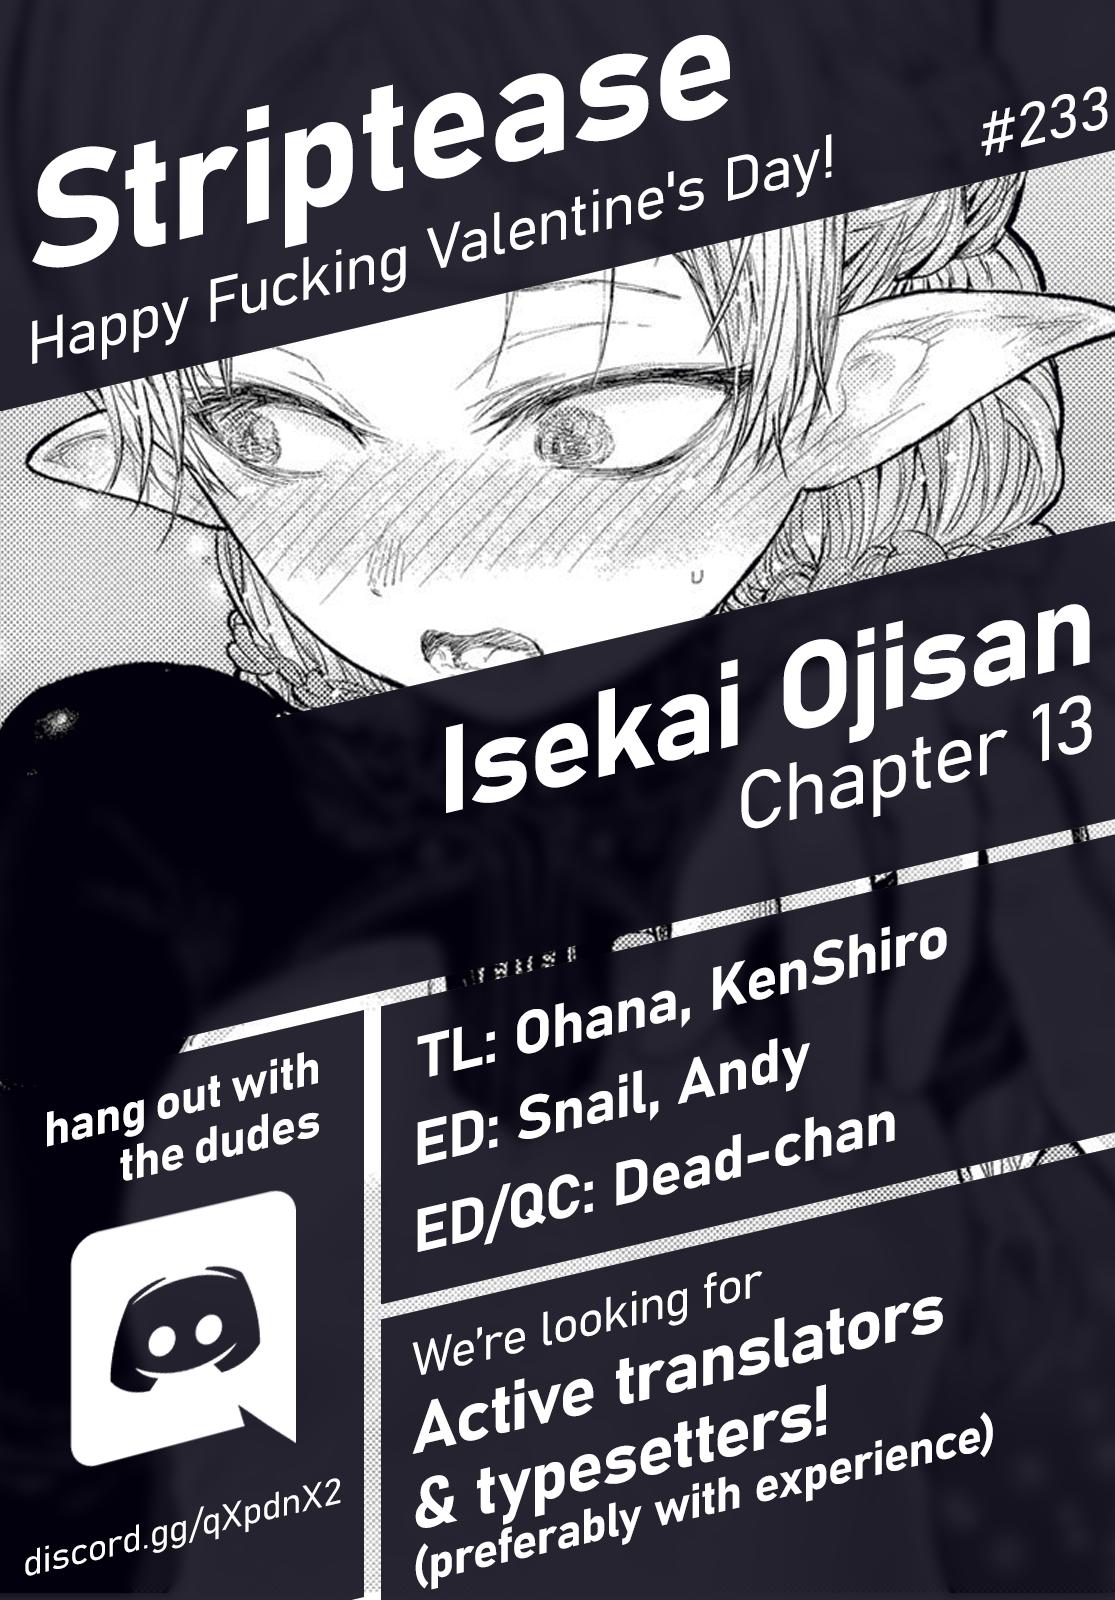 Read Isekai Ojisan Vol.2 Chapter 13 on Mangakakalot